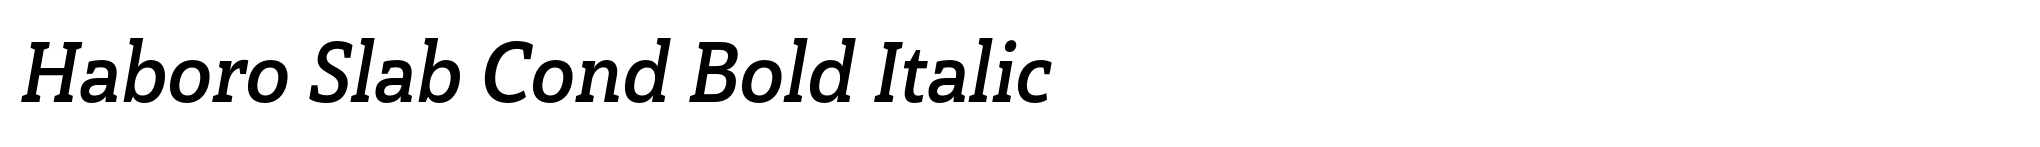 Haboro Slab Cond Bold Italic image